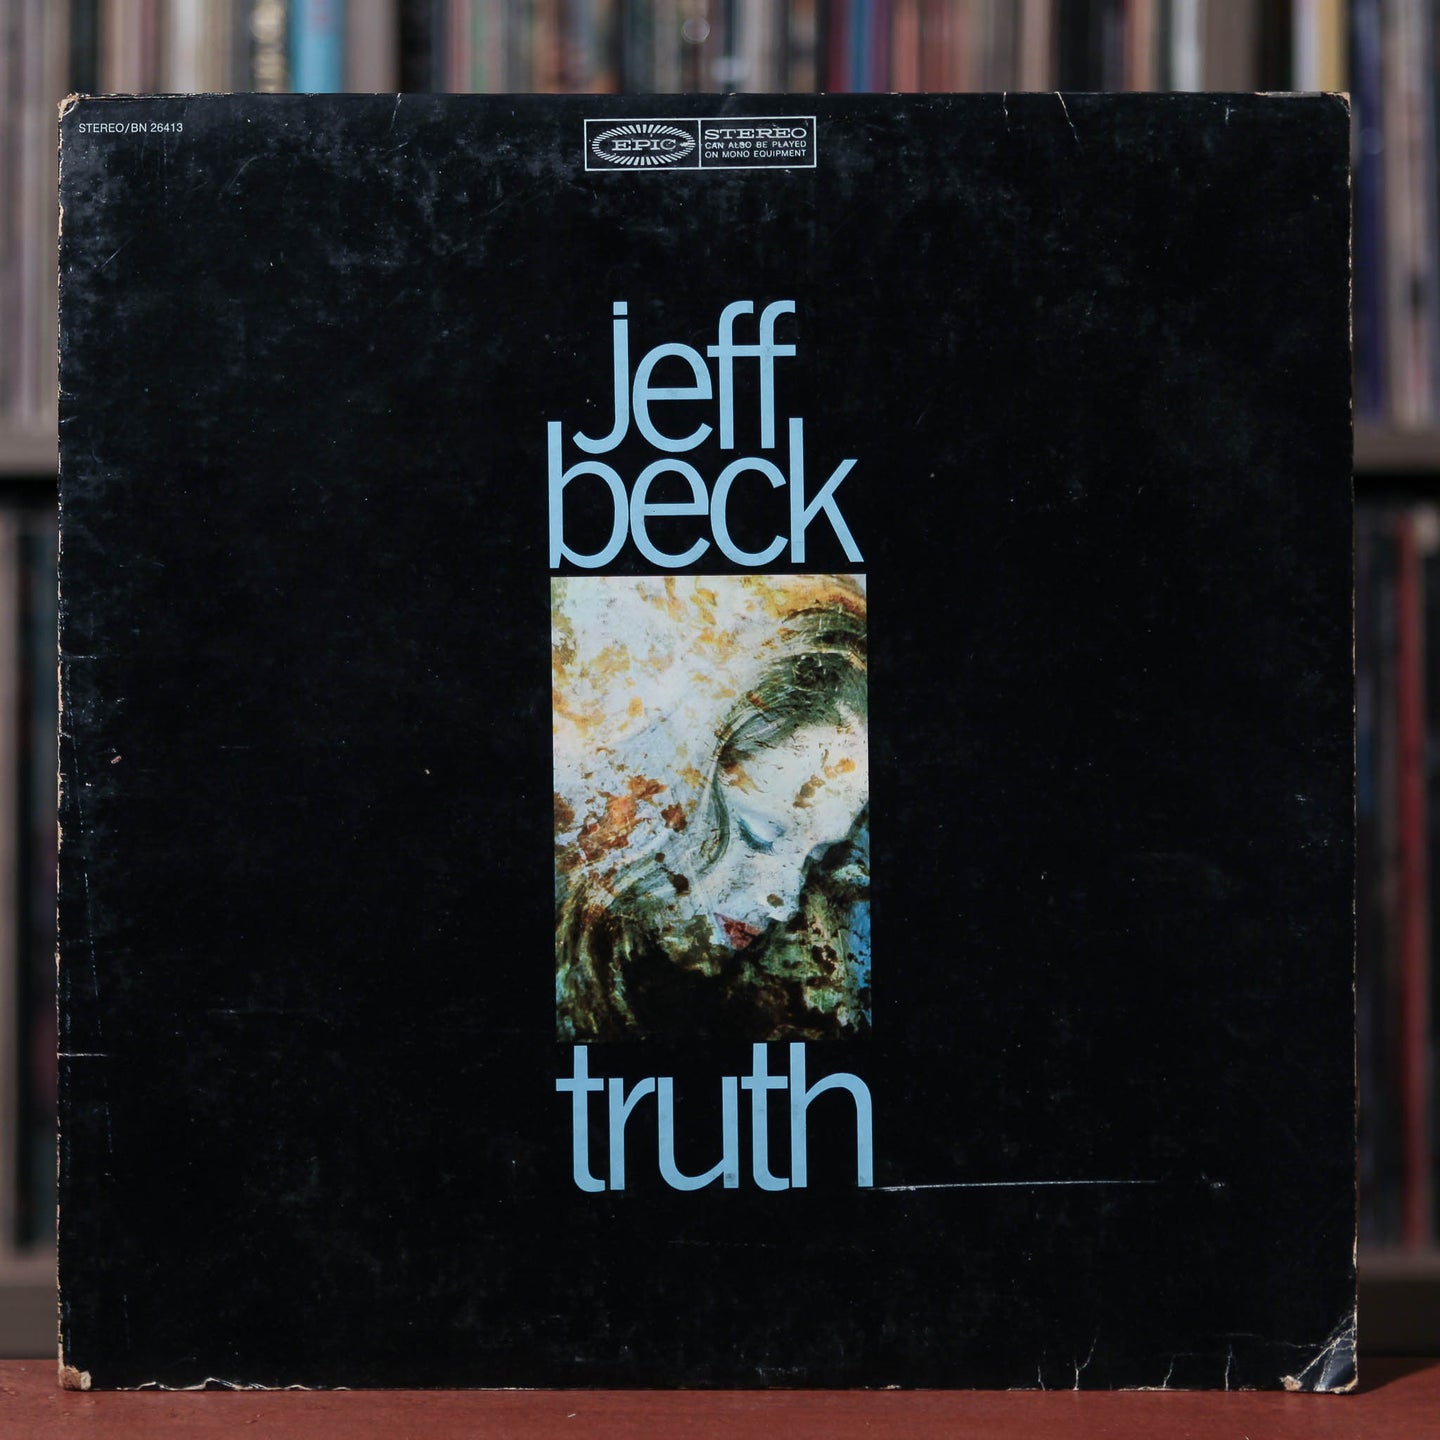 Jeff Beck - Truth - 1968 Epic, VG/VG